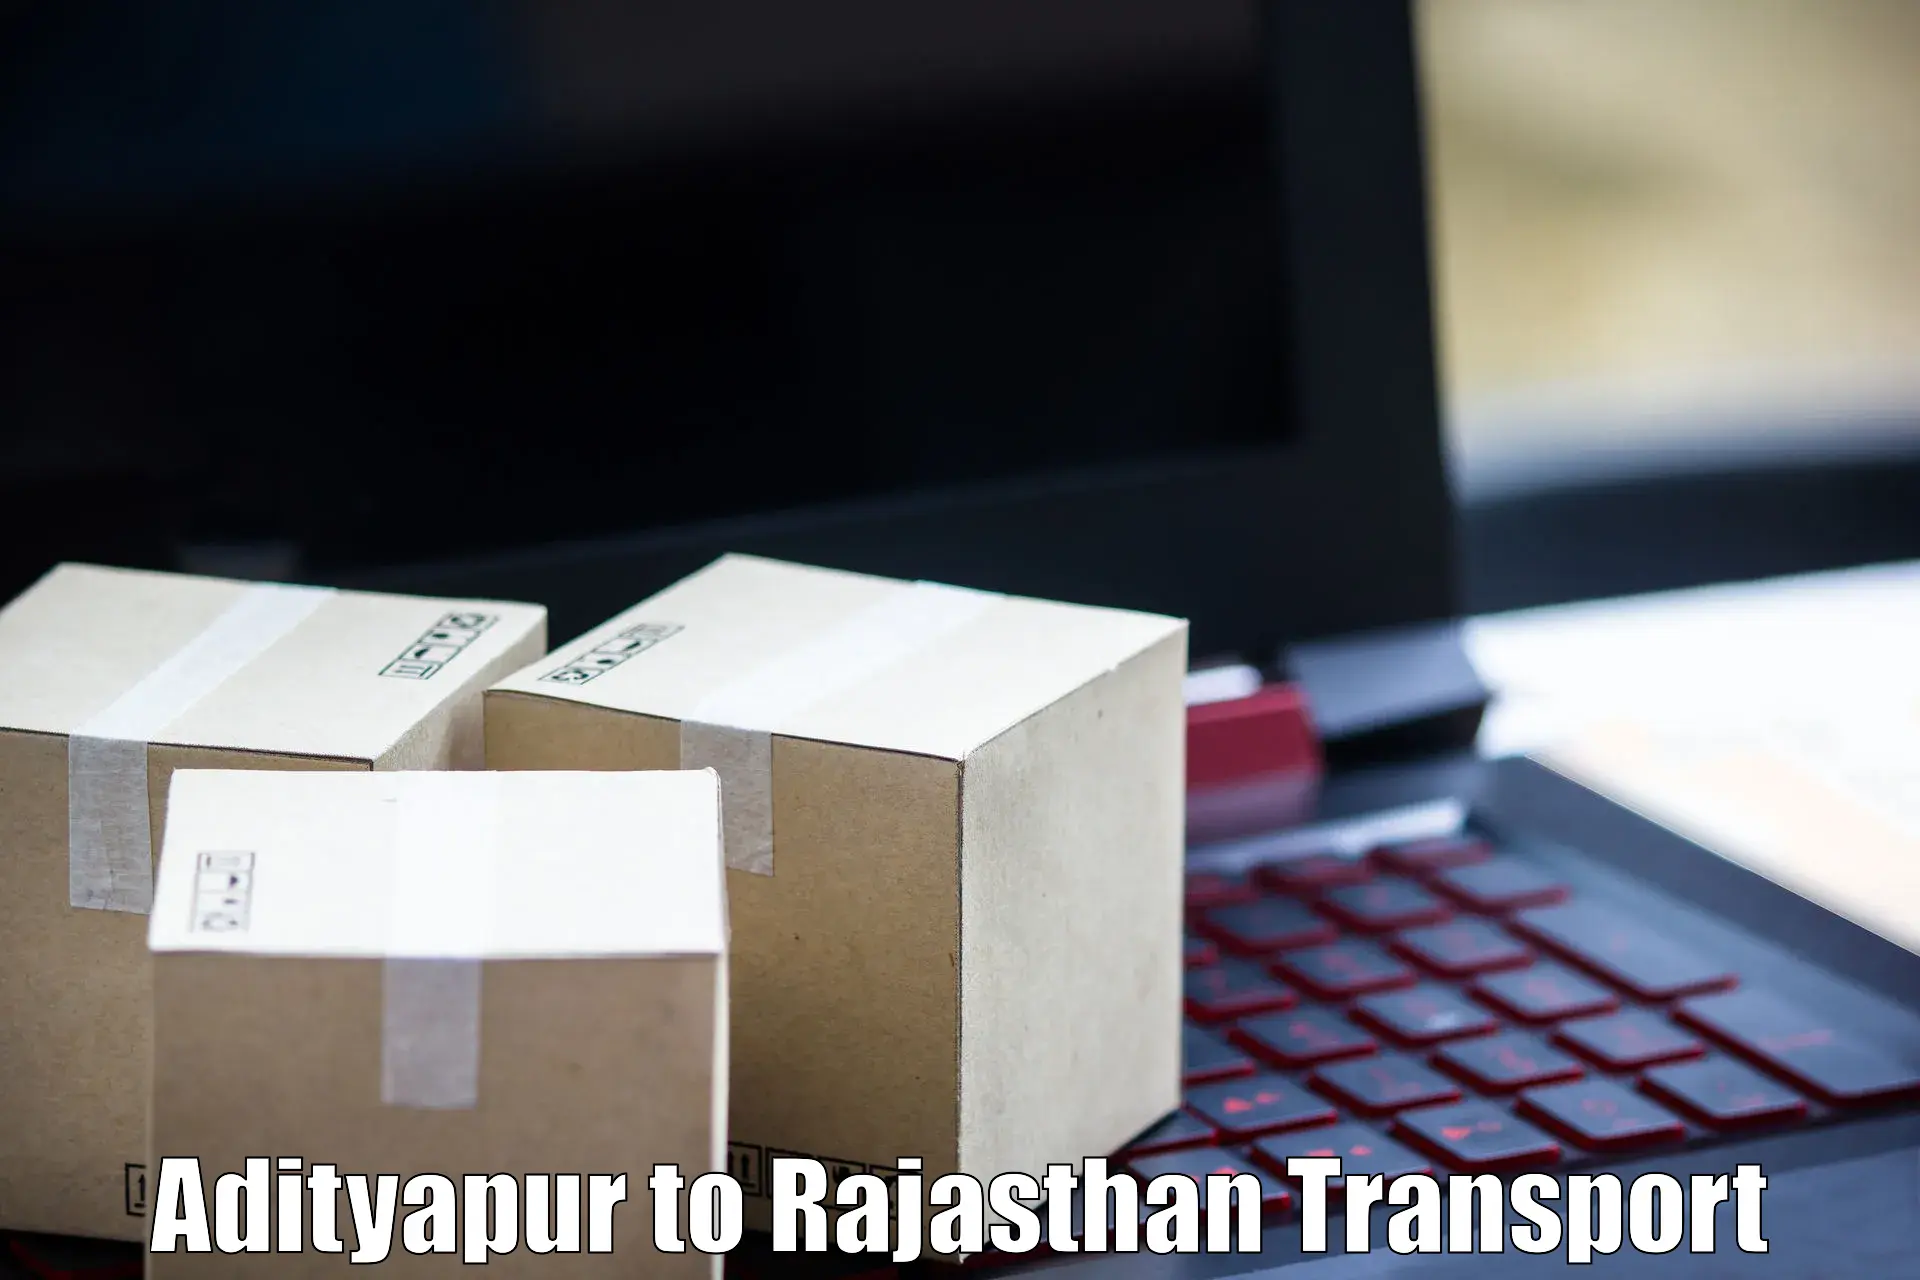 Nearby transport service Adityapur to Banswara